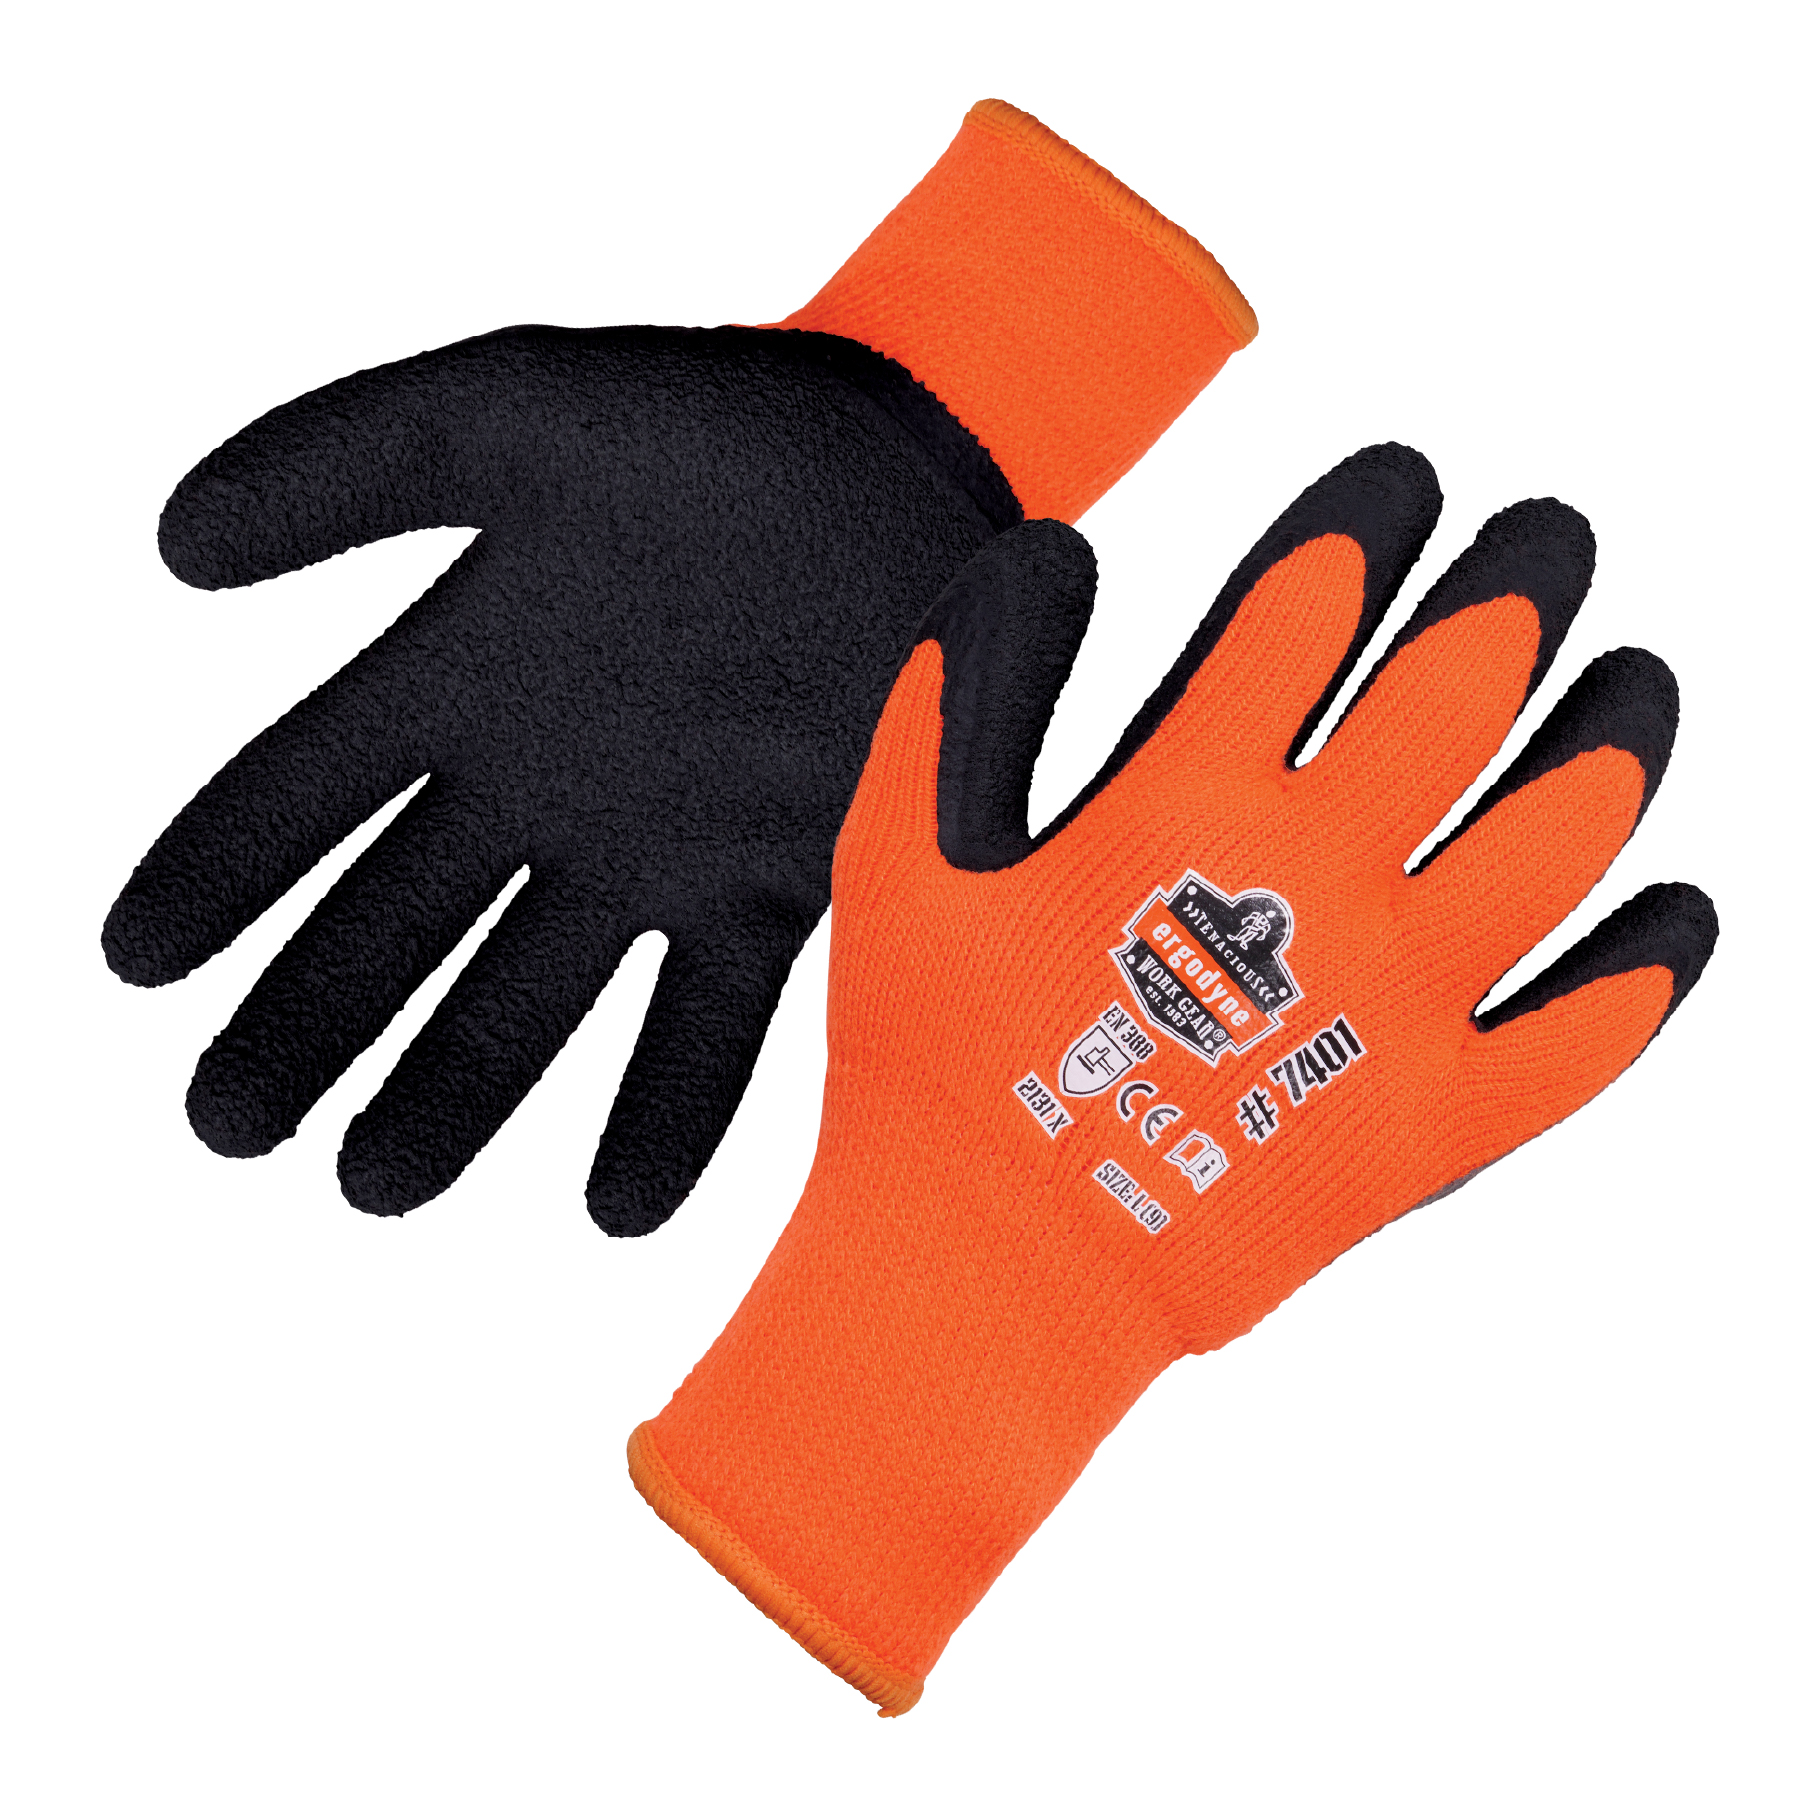 https://www.ergodyne.com/sites/default/files/product-images/17623-7401-coated-lightweight-winter-work-glove-orange-pair_1.jpg